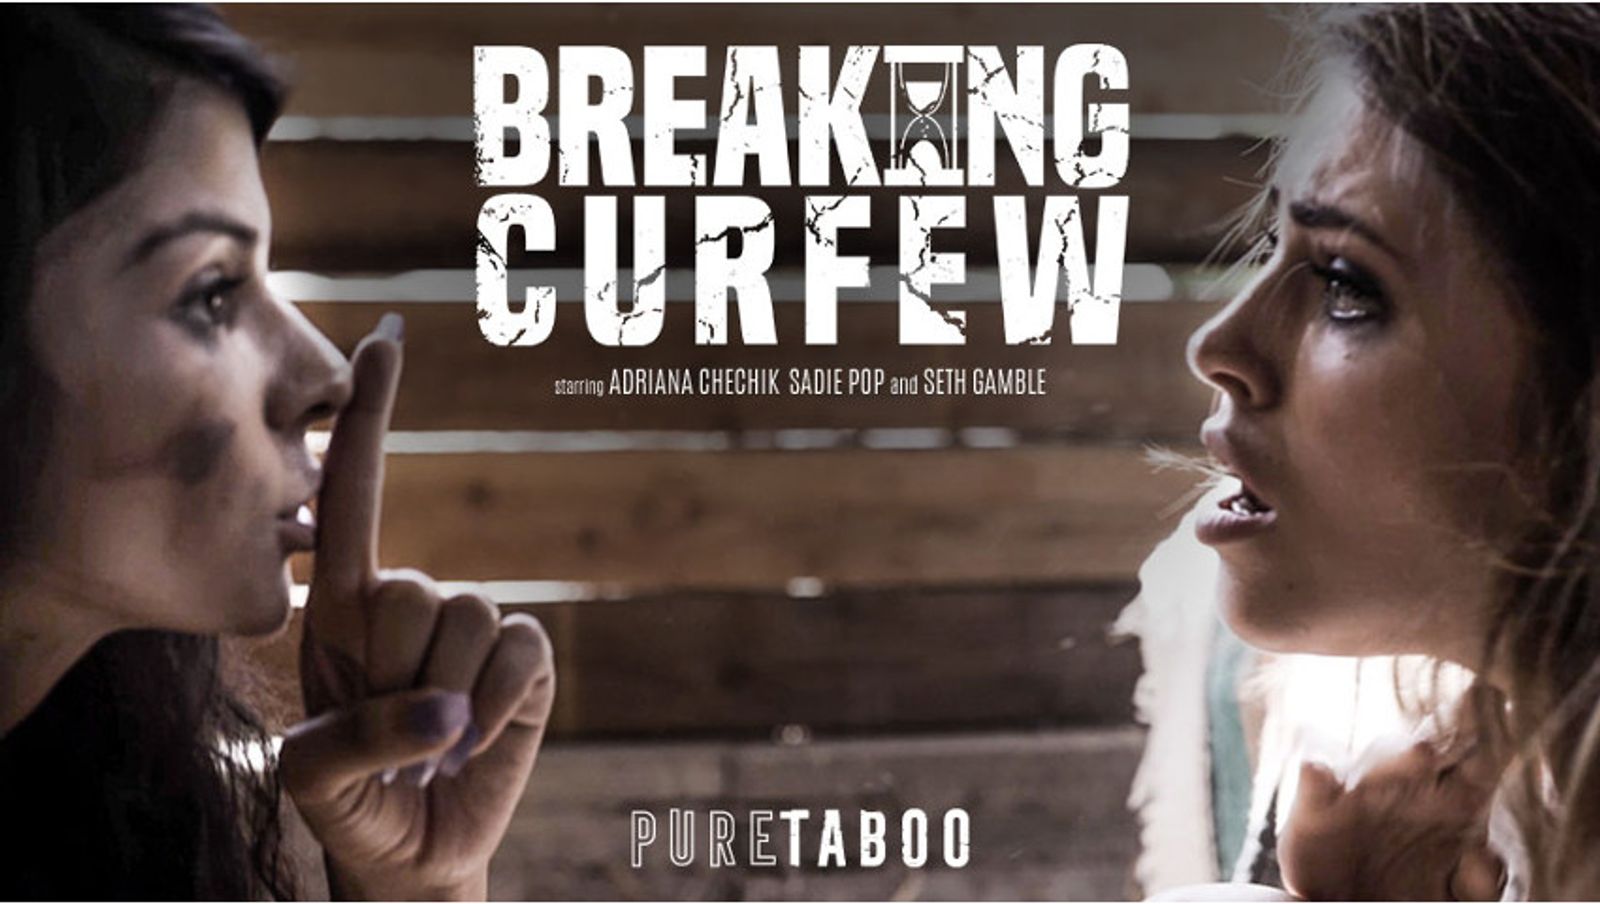 Adriana Chechik is 'Breaking Curfew' in Pure Taboo Showcase